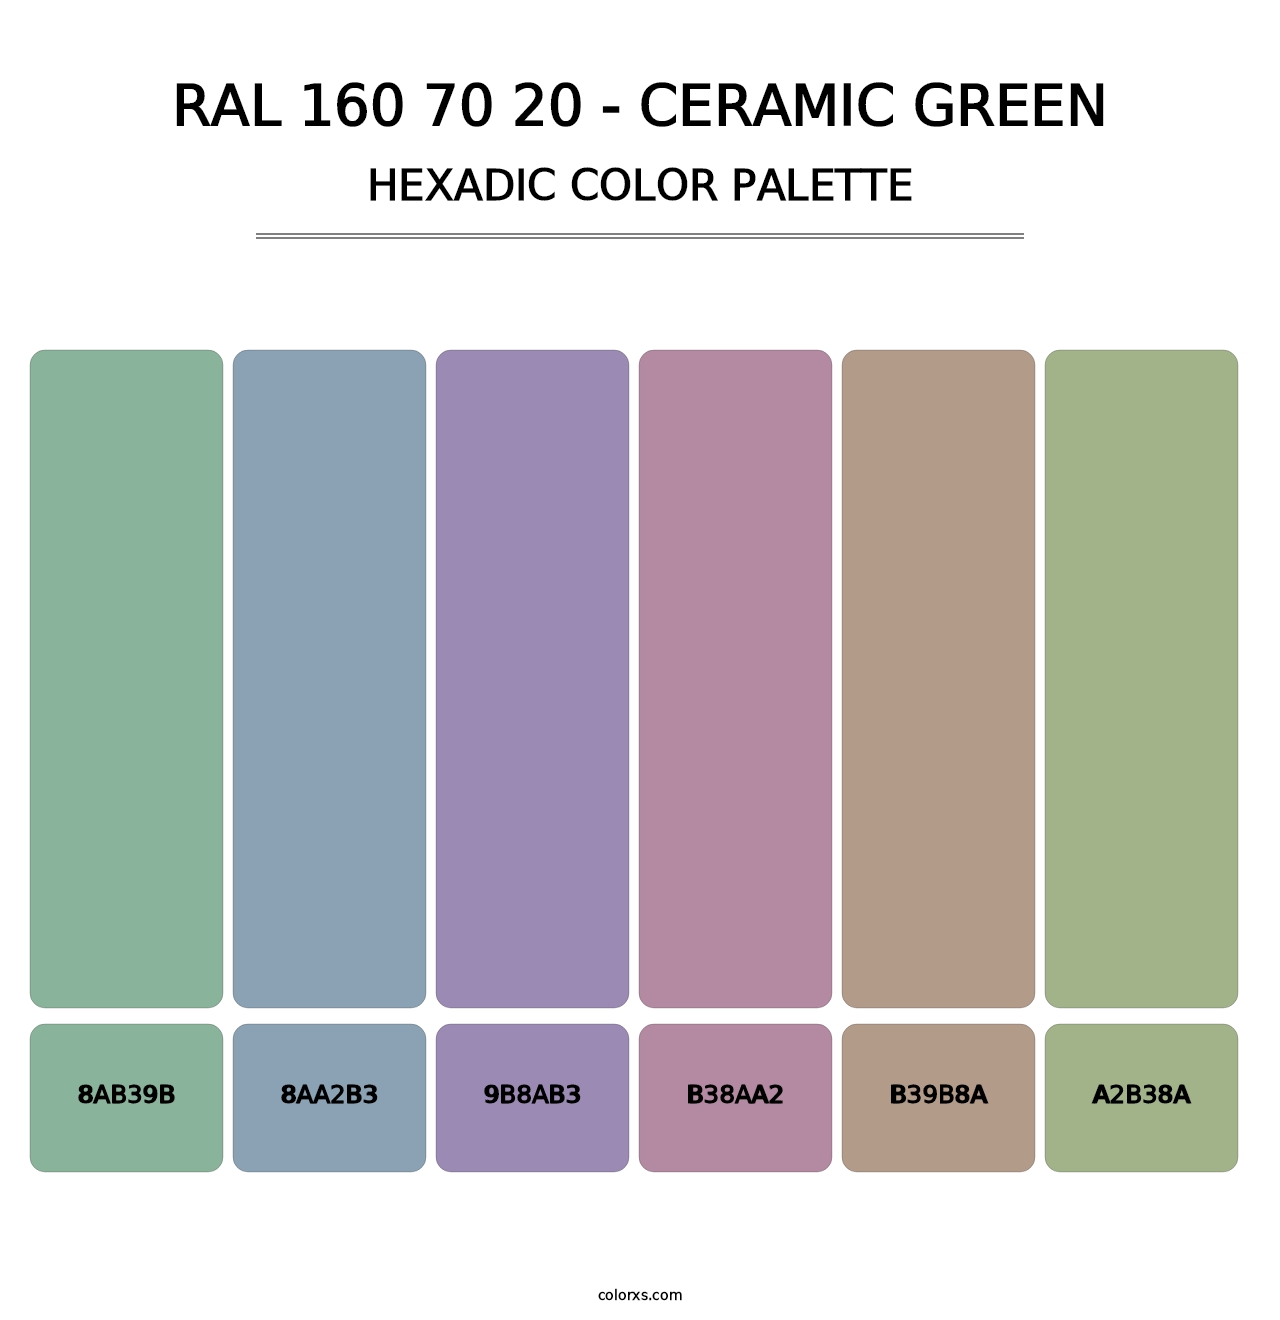 RAL 160 70 20 - Ceramic Green - Hexadic Color Palette